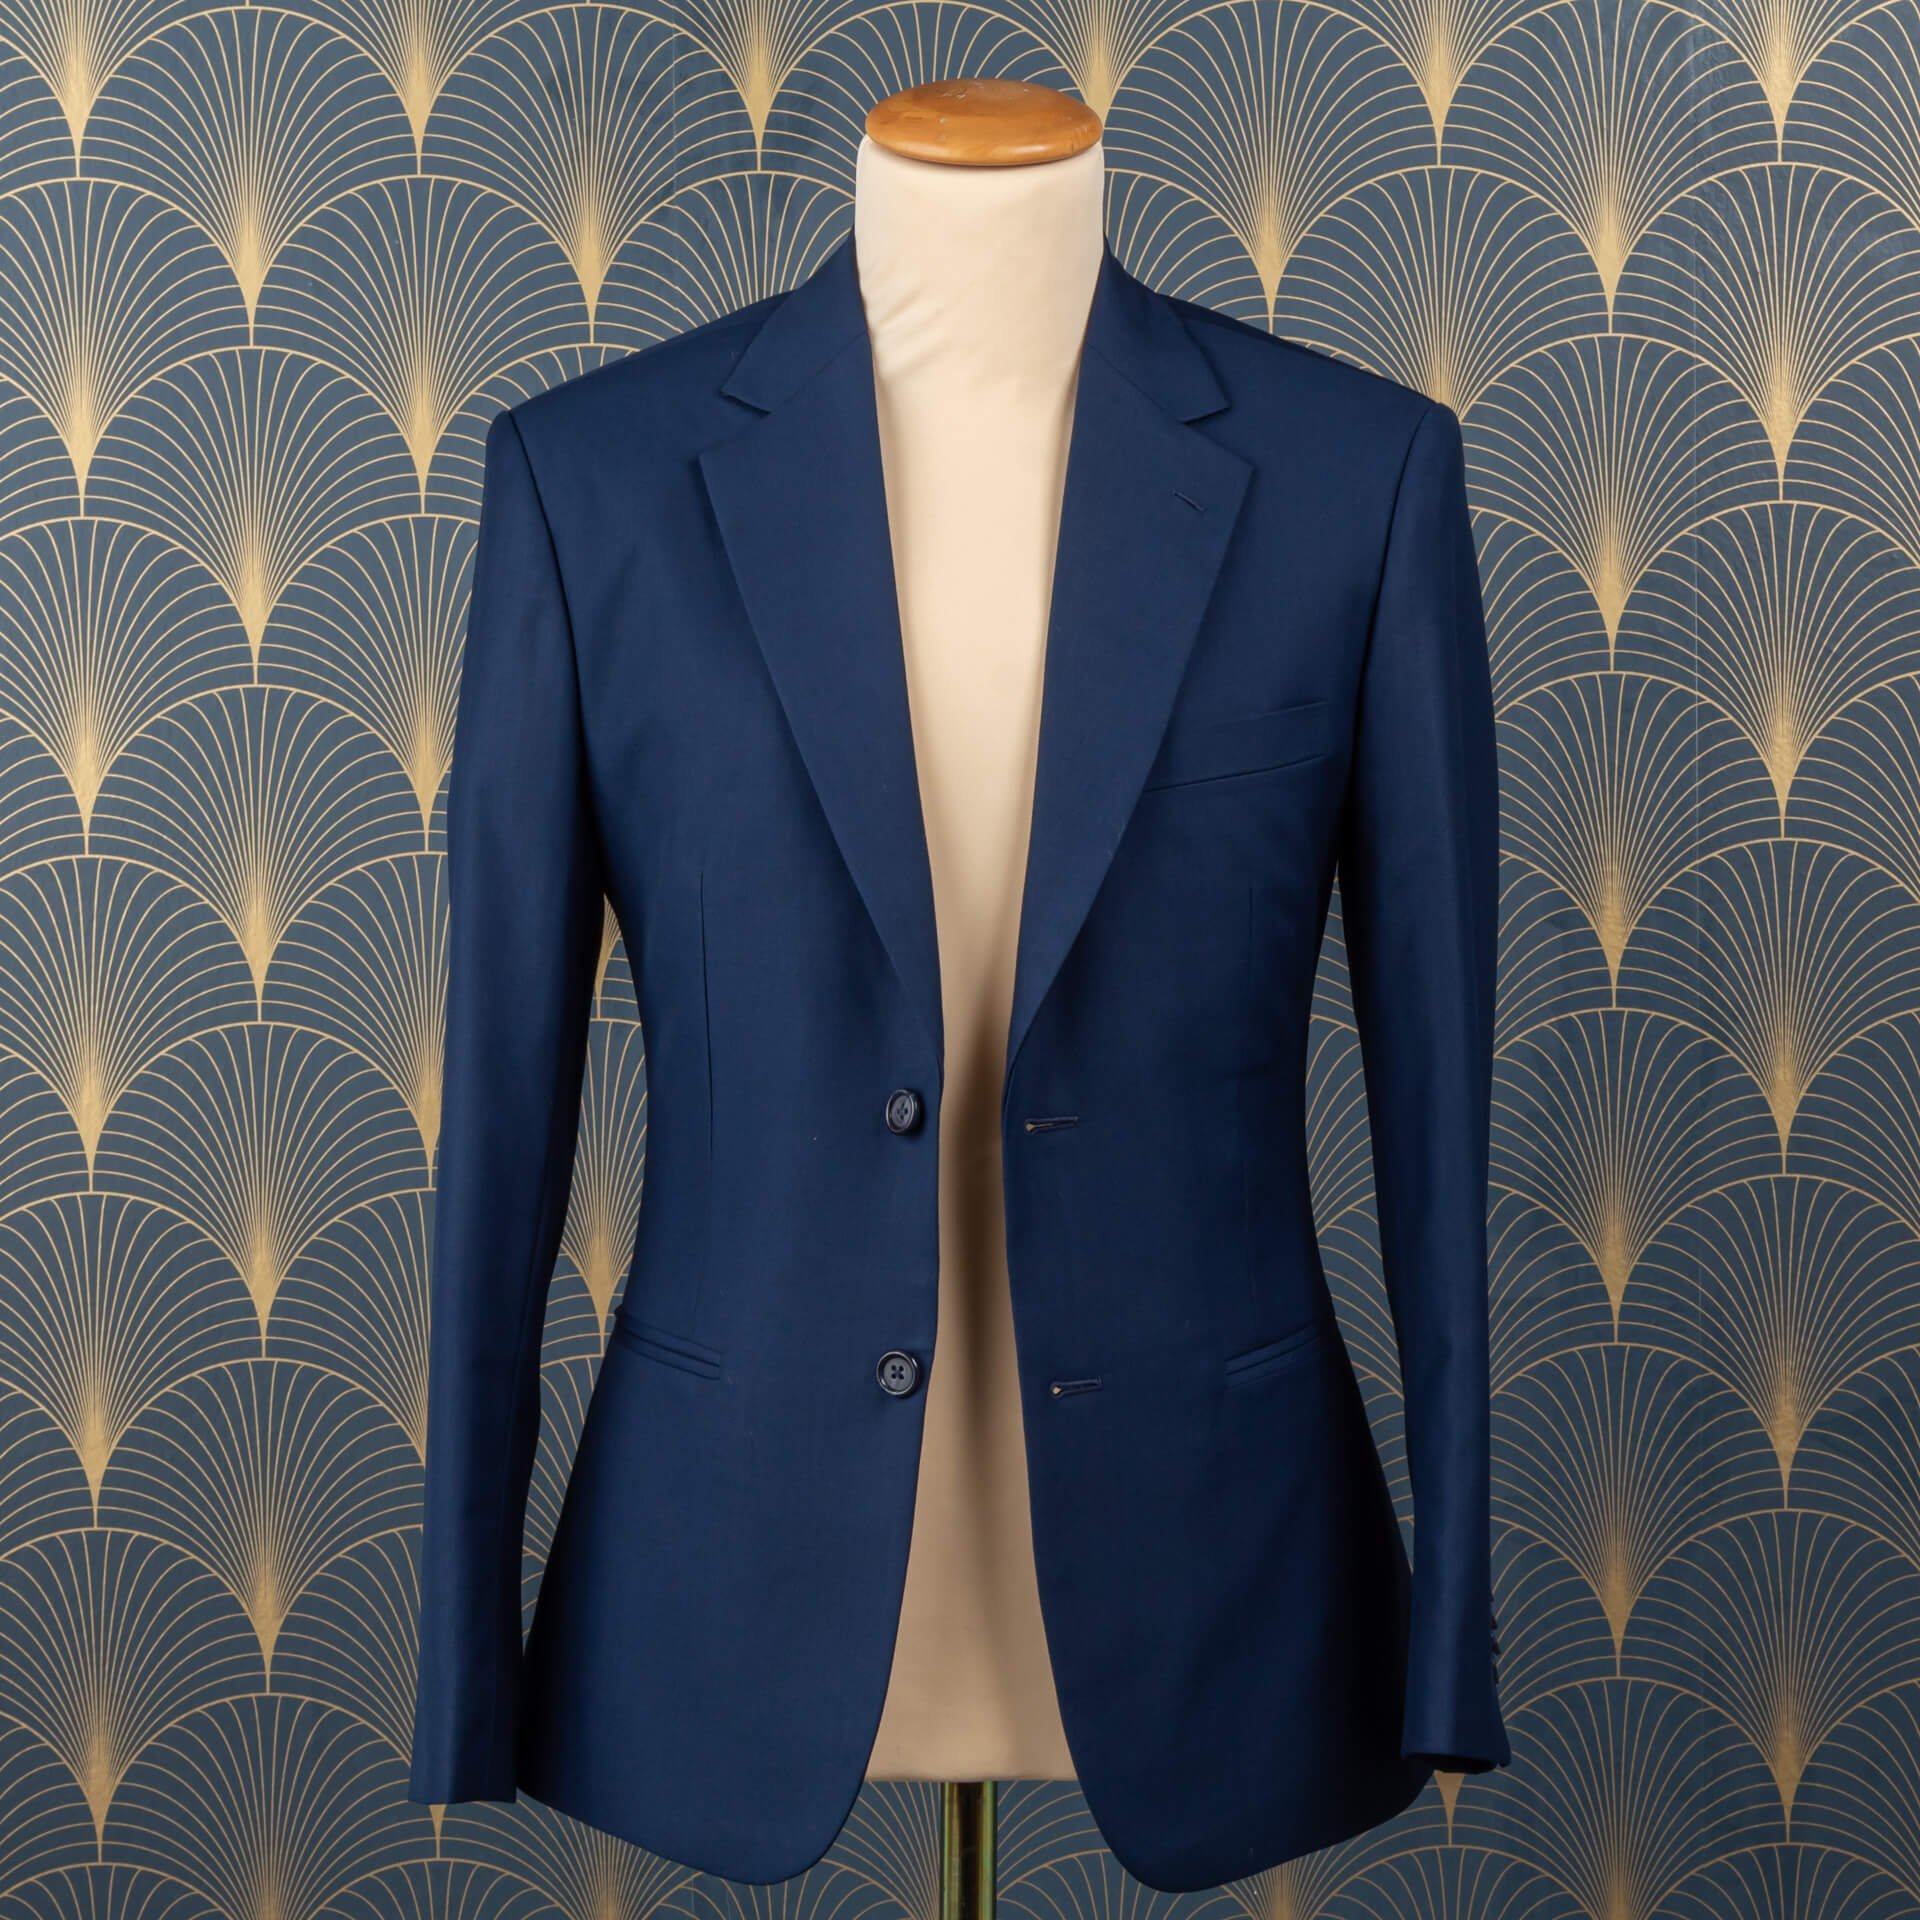 Bespoke Business Casual Suits & Jackets — De Oost Bespoke Tailoring